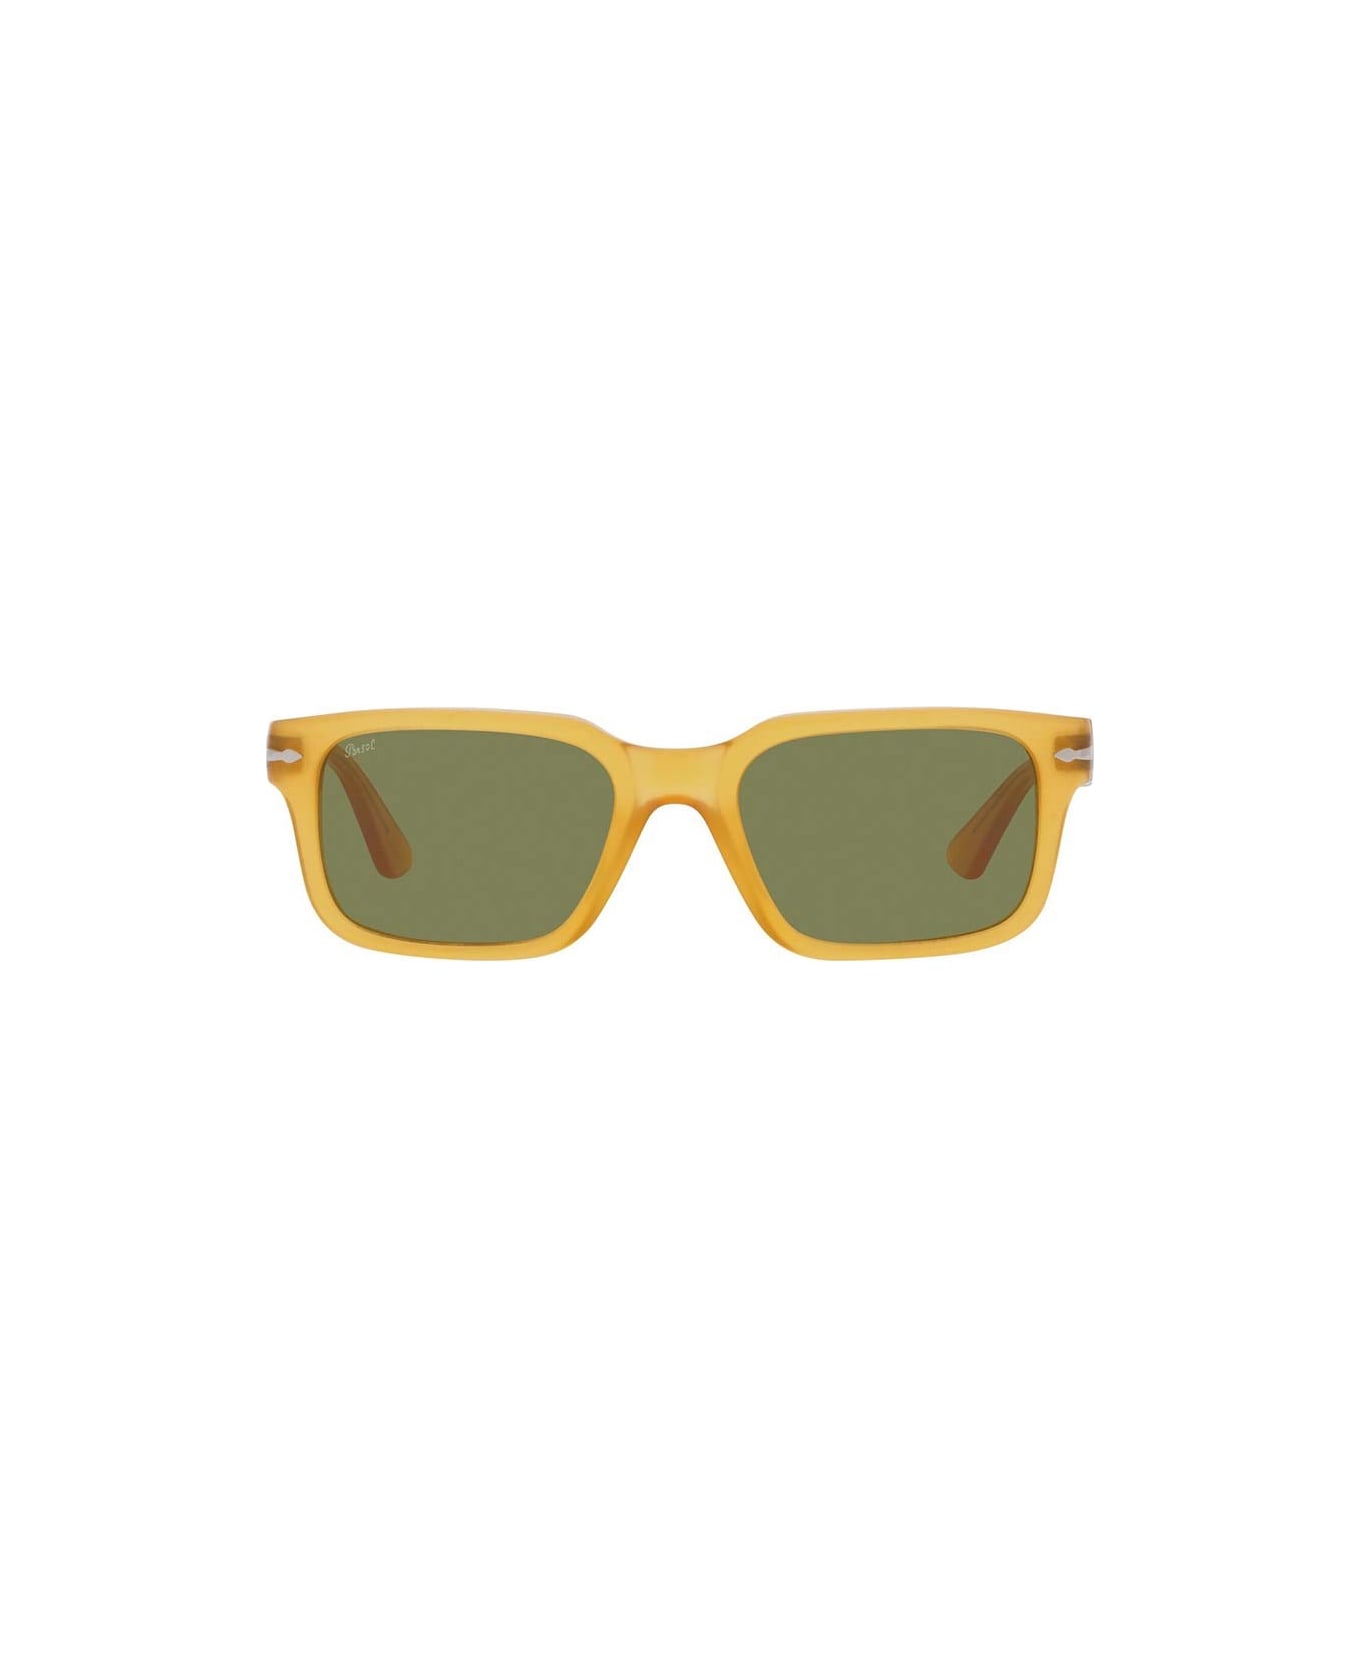 Barton Perreira Eyewear - Miele/Verde